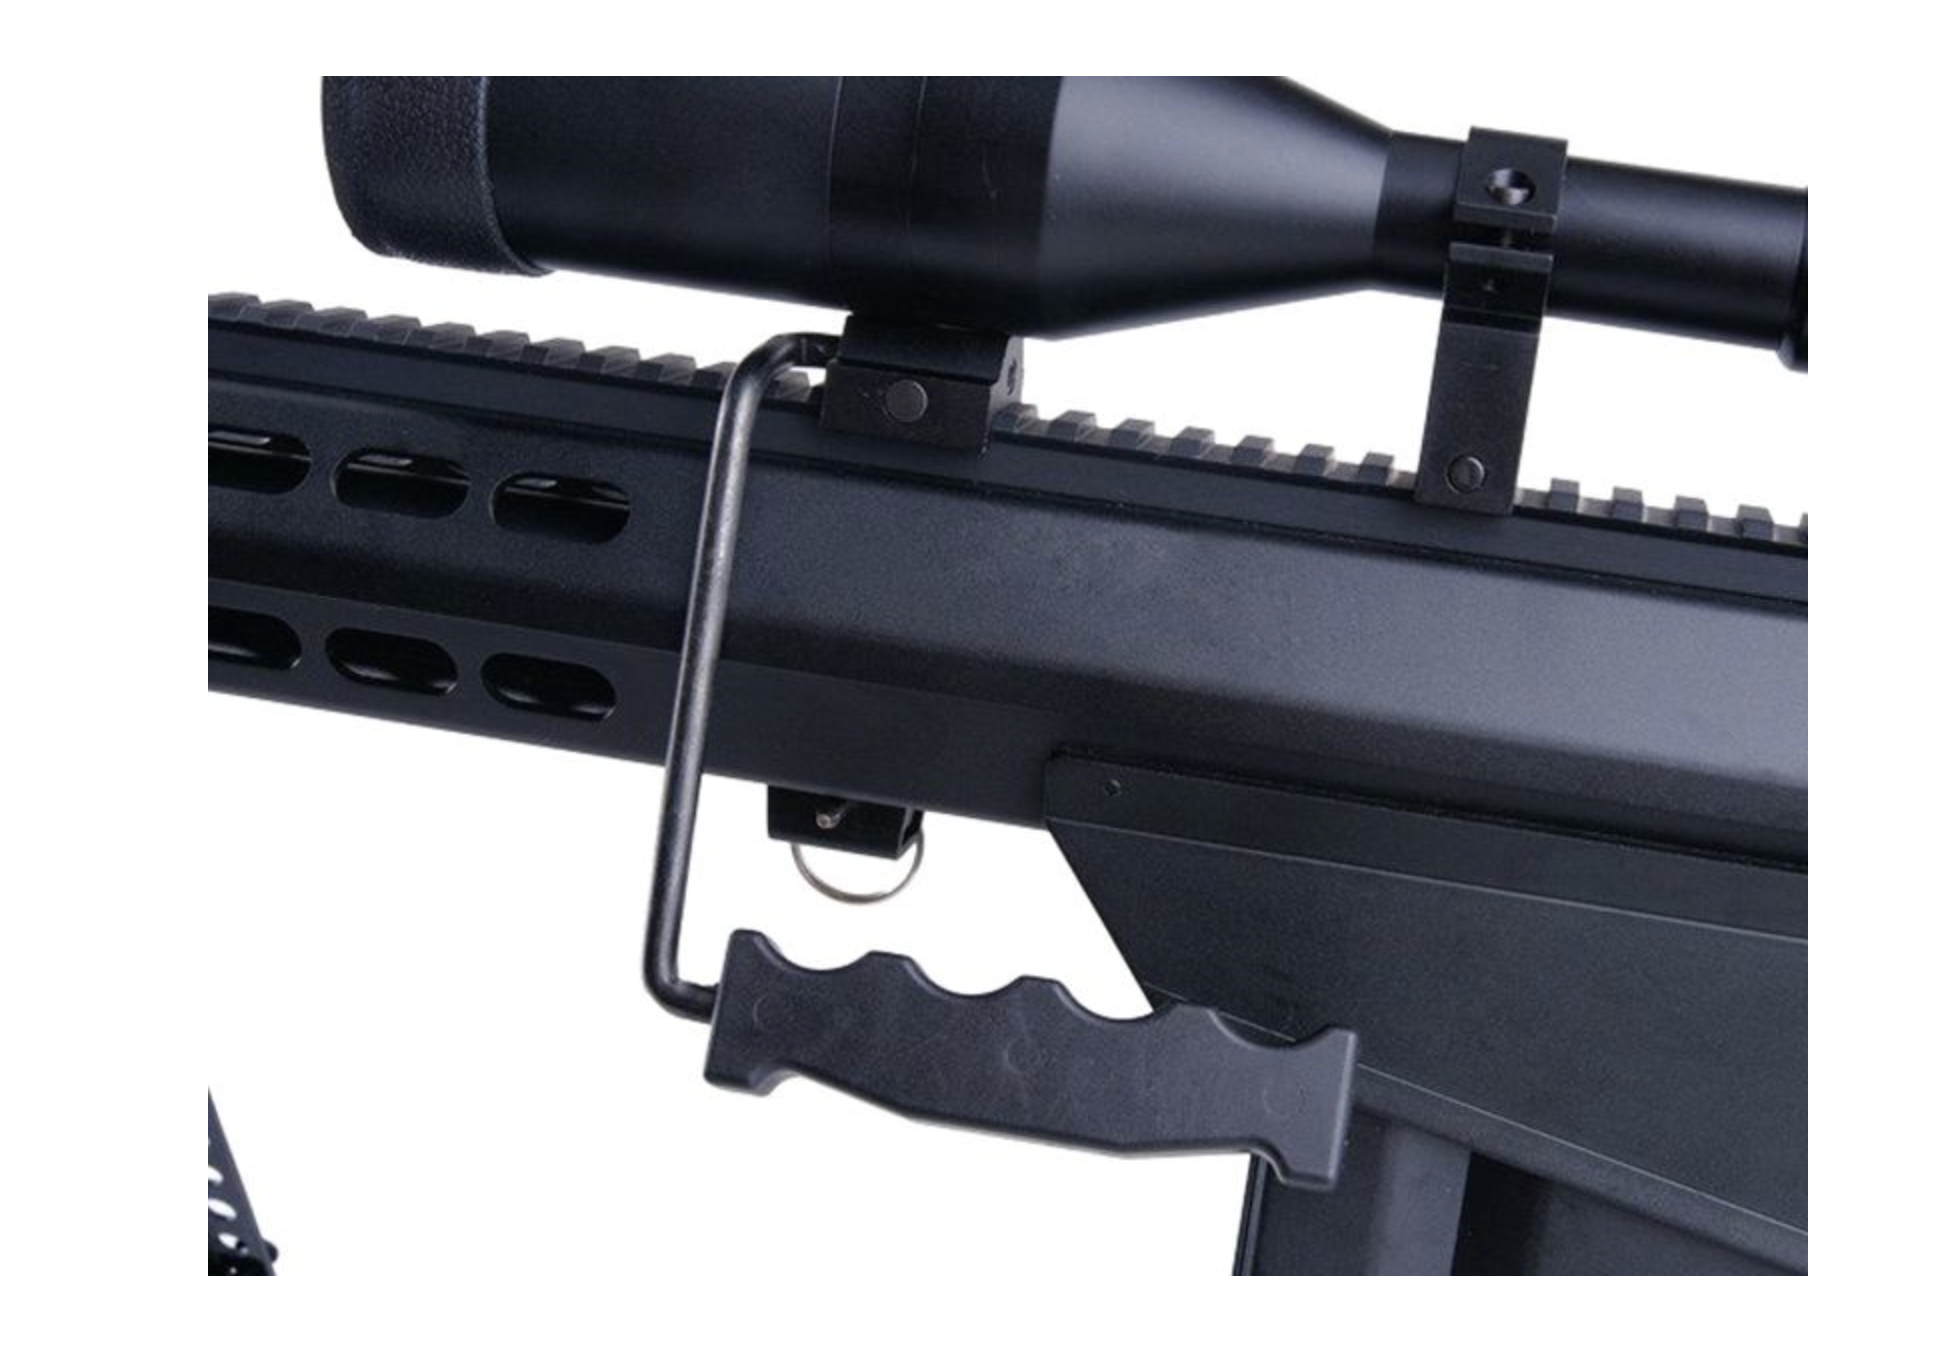 6mmProShop Barrett Licensed M82A1 Long Range Airsoft AEG Sniper